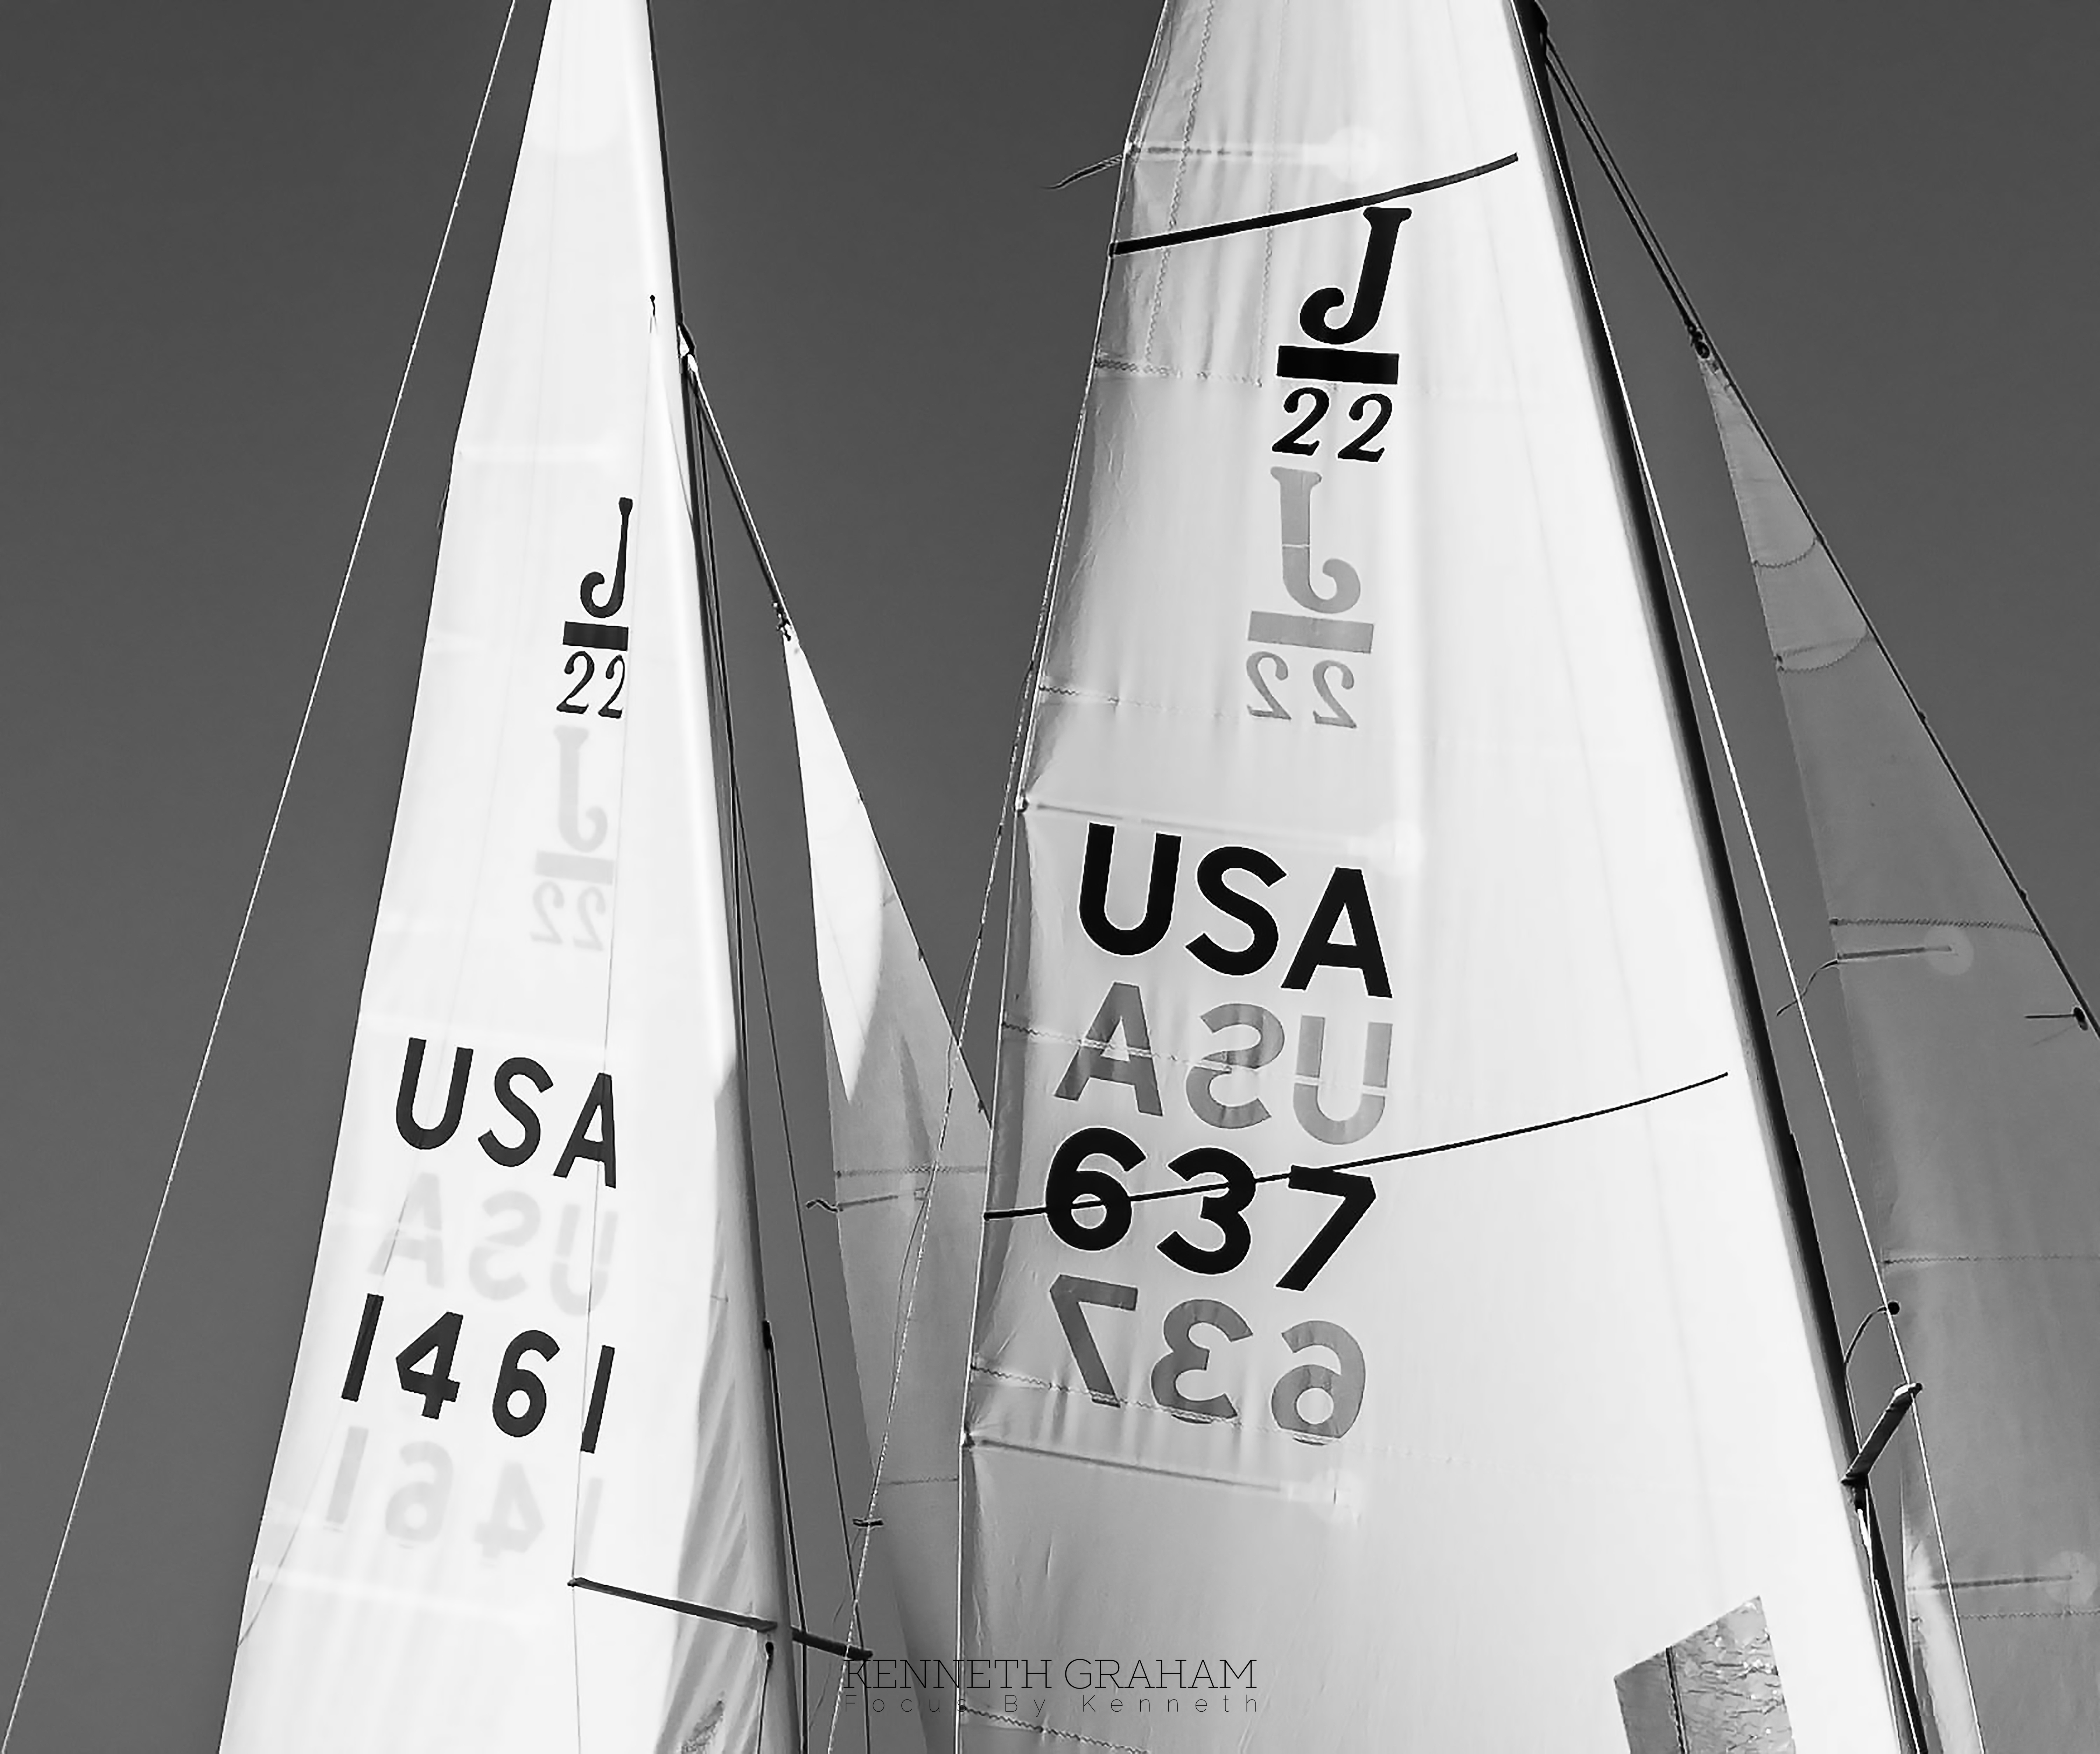 USA Sail_Photogarphy - Kenneth Graham